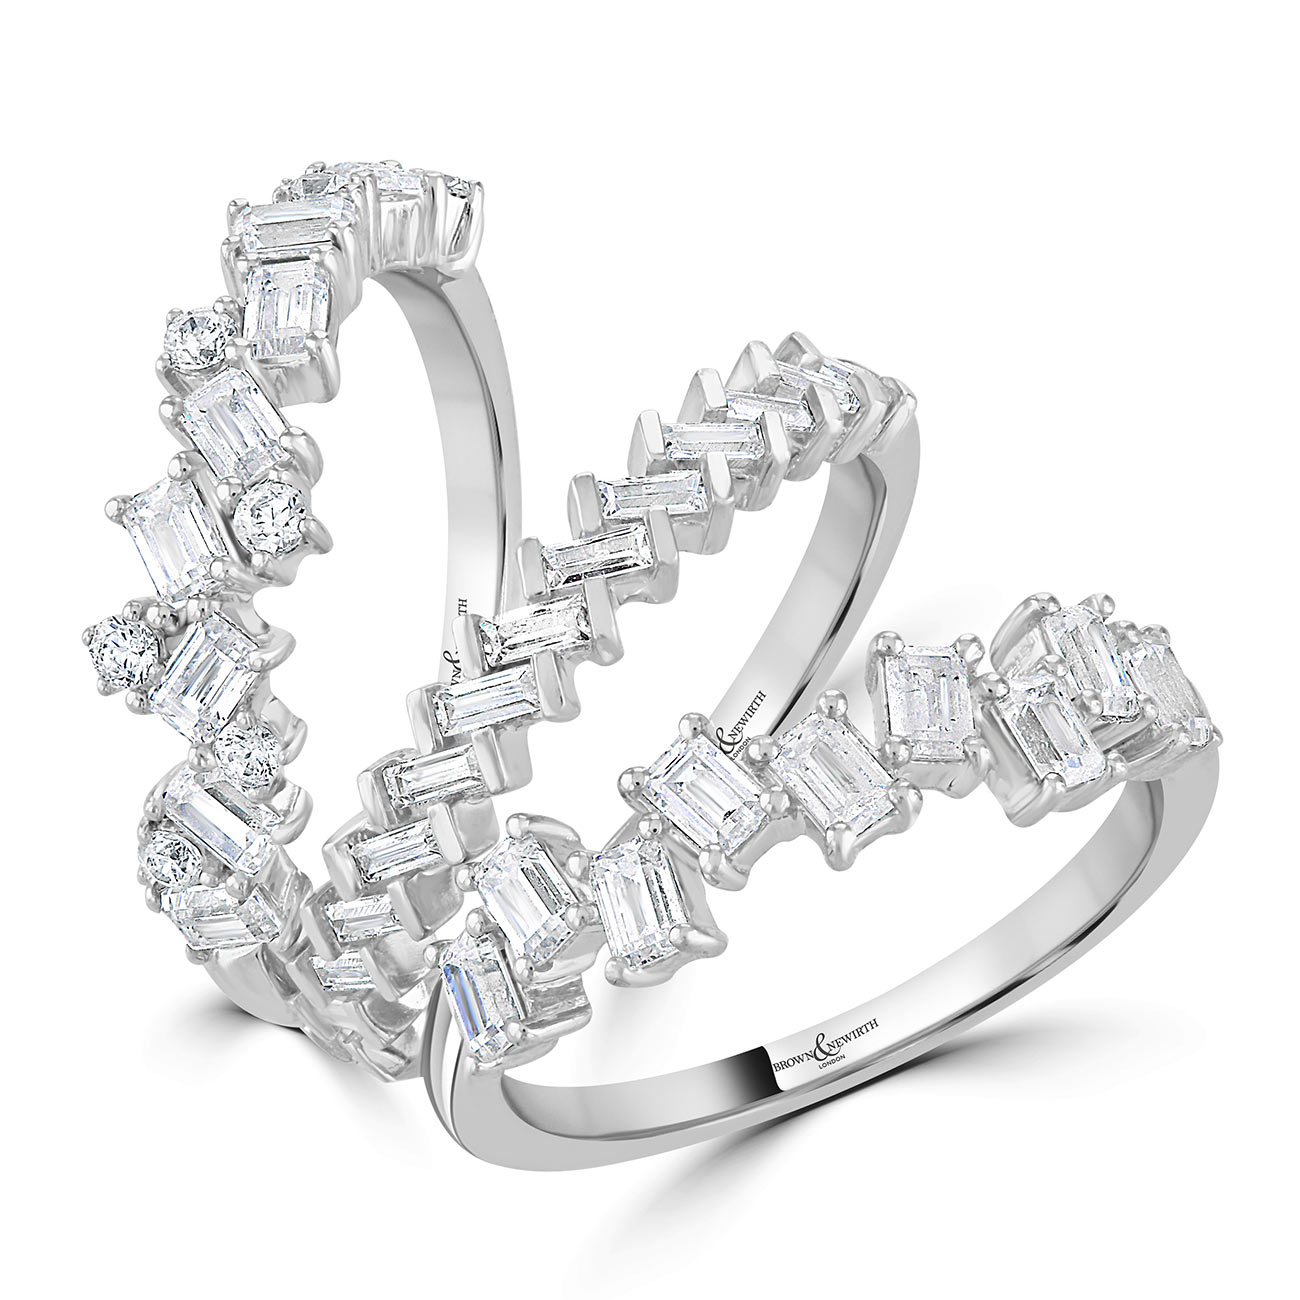 Drakes Jewellers Ring Feature Wed Wedding Cornwall Devon Bride7